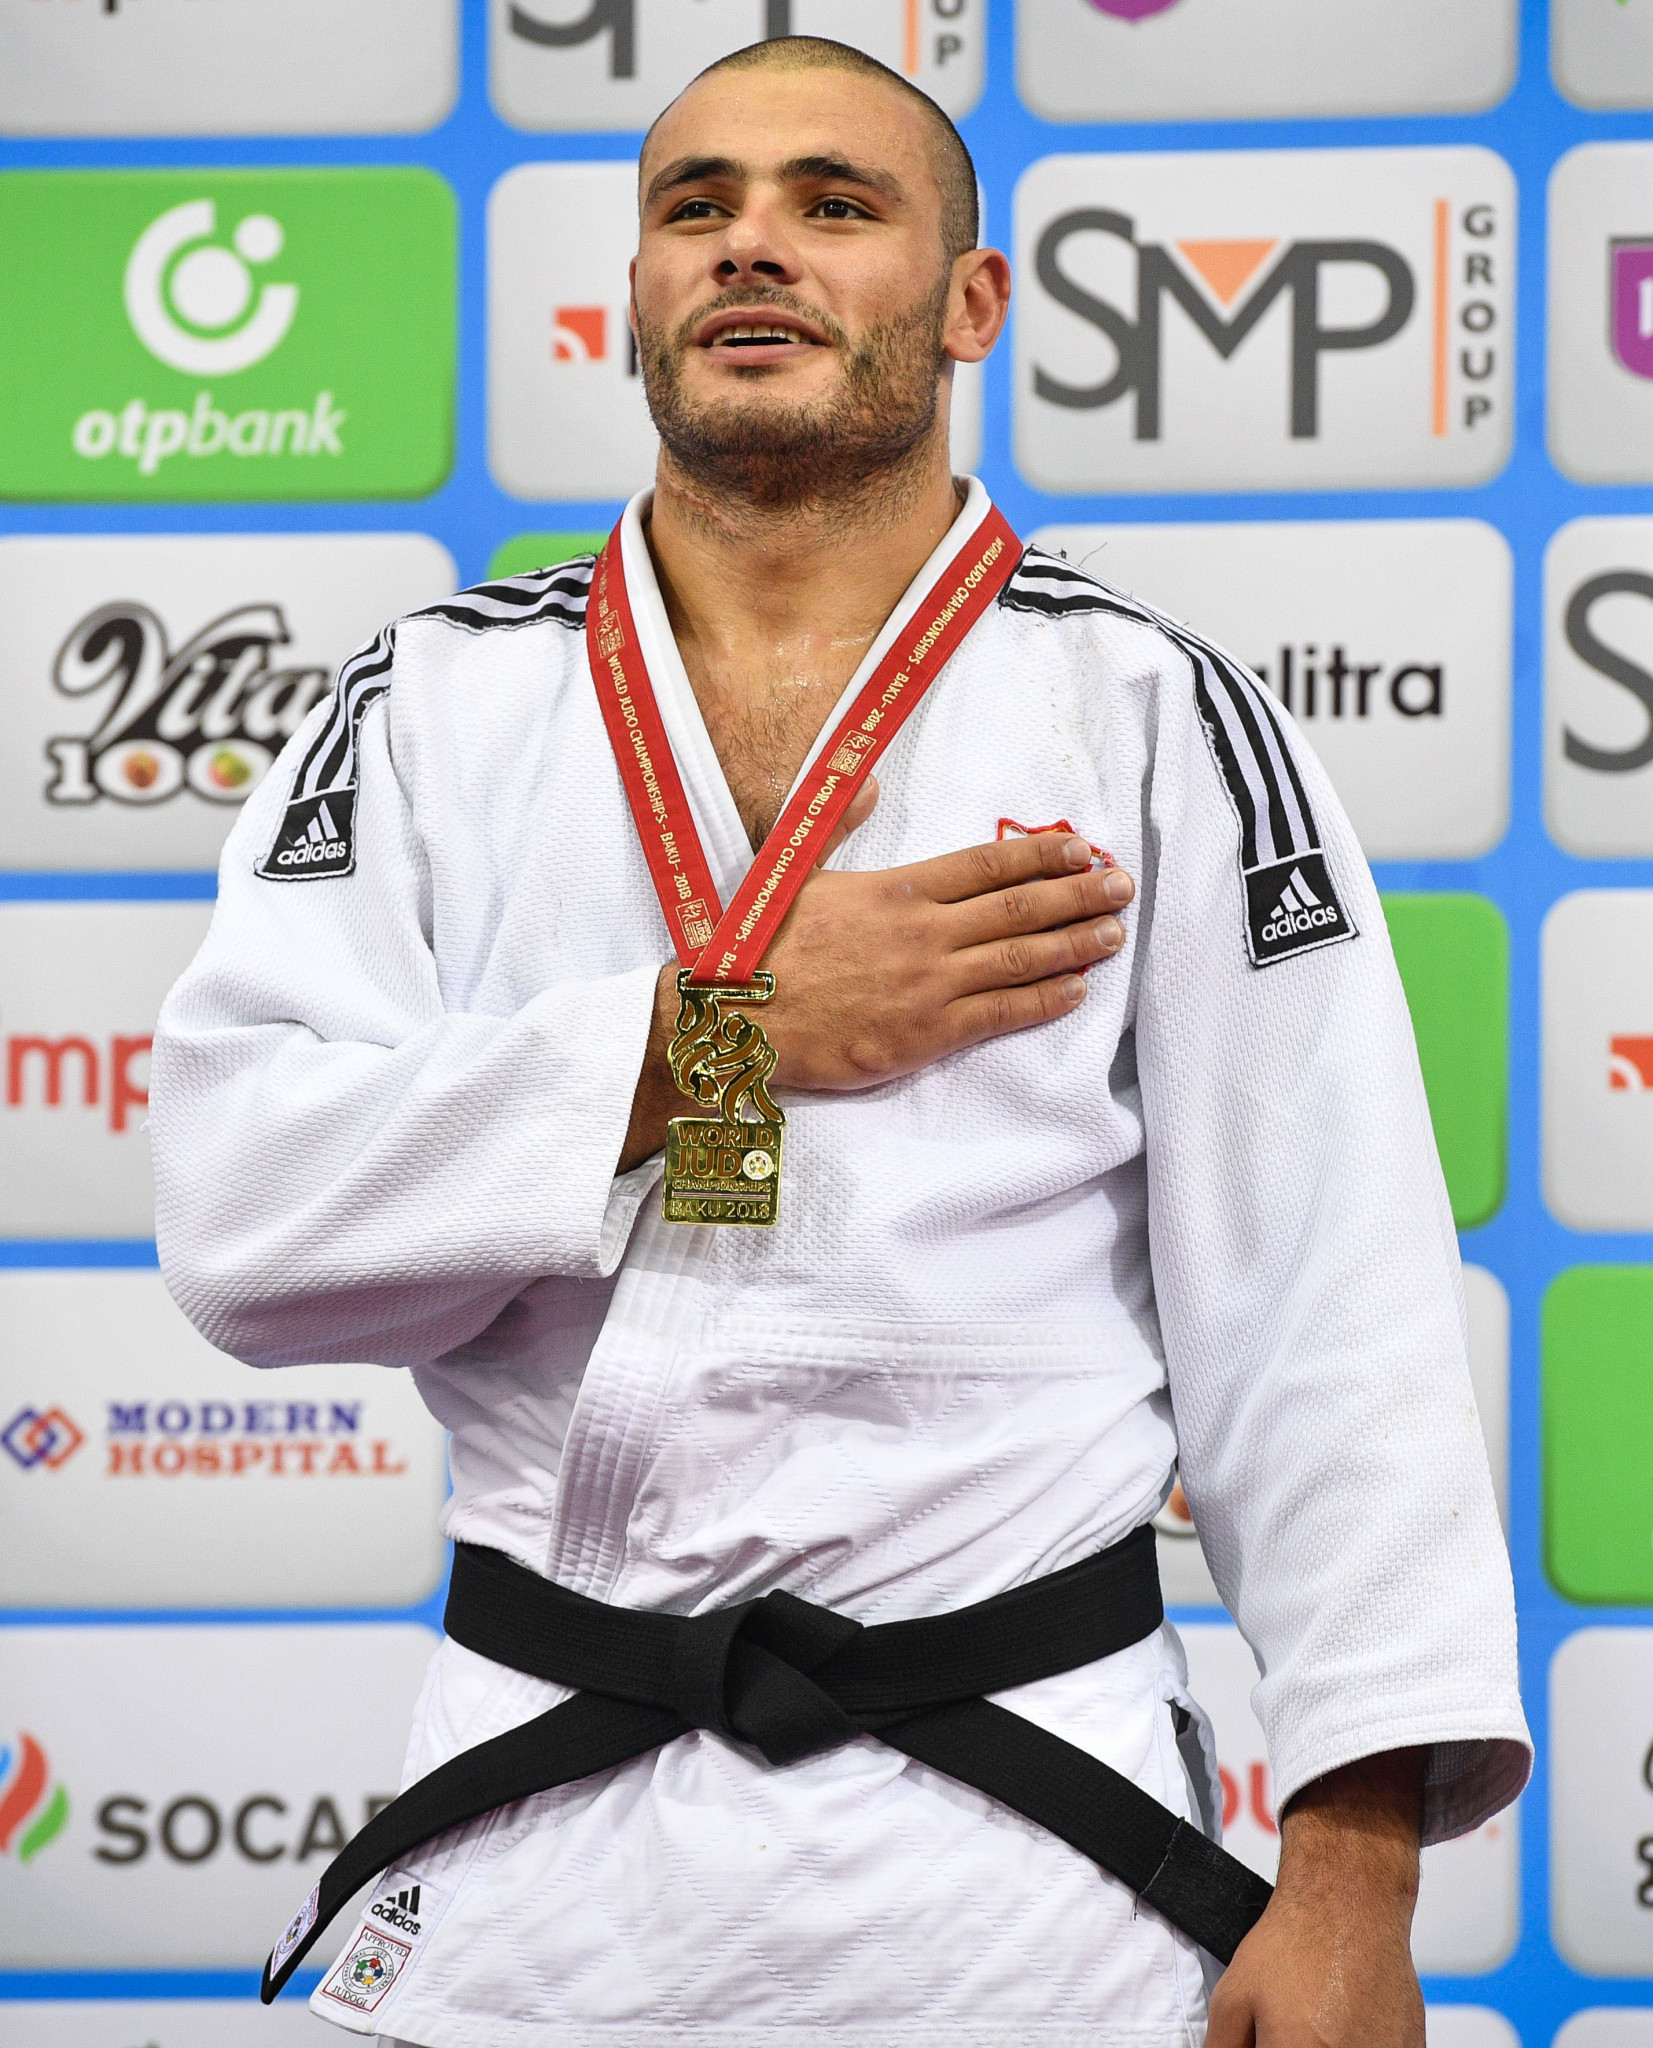 Georgia win final individual gold of World Judo Championships